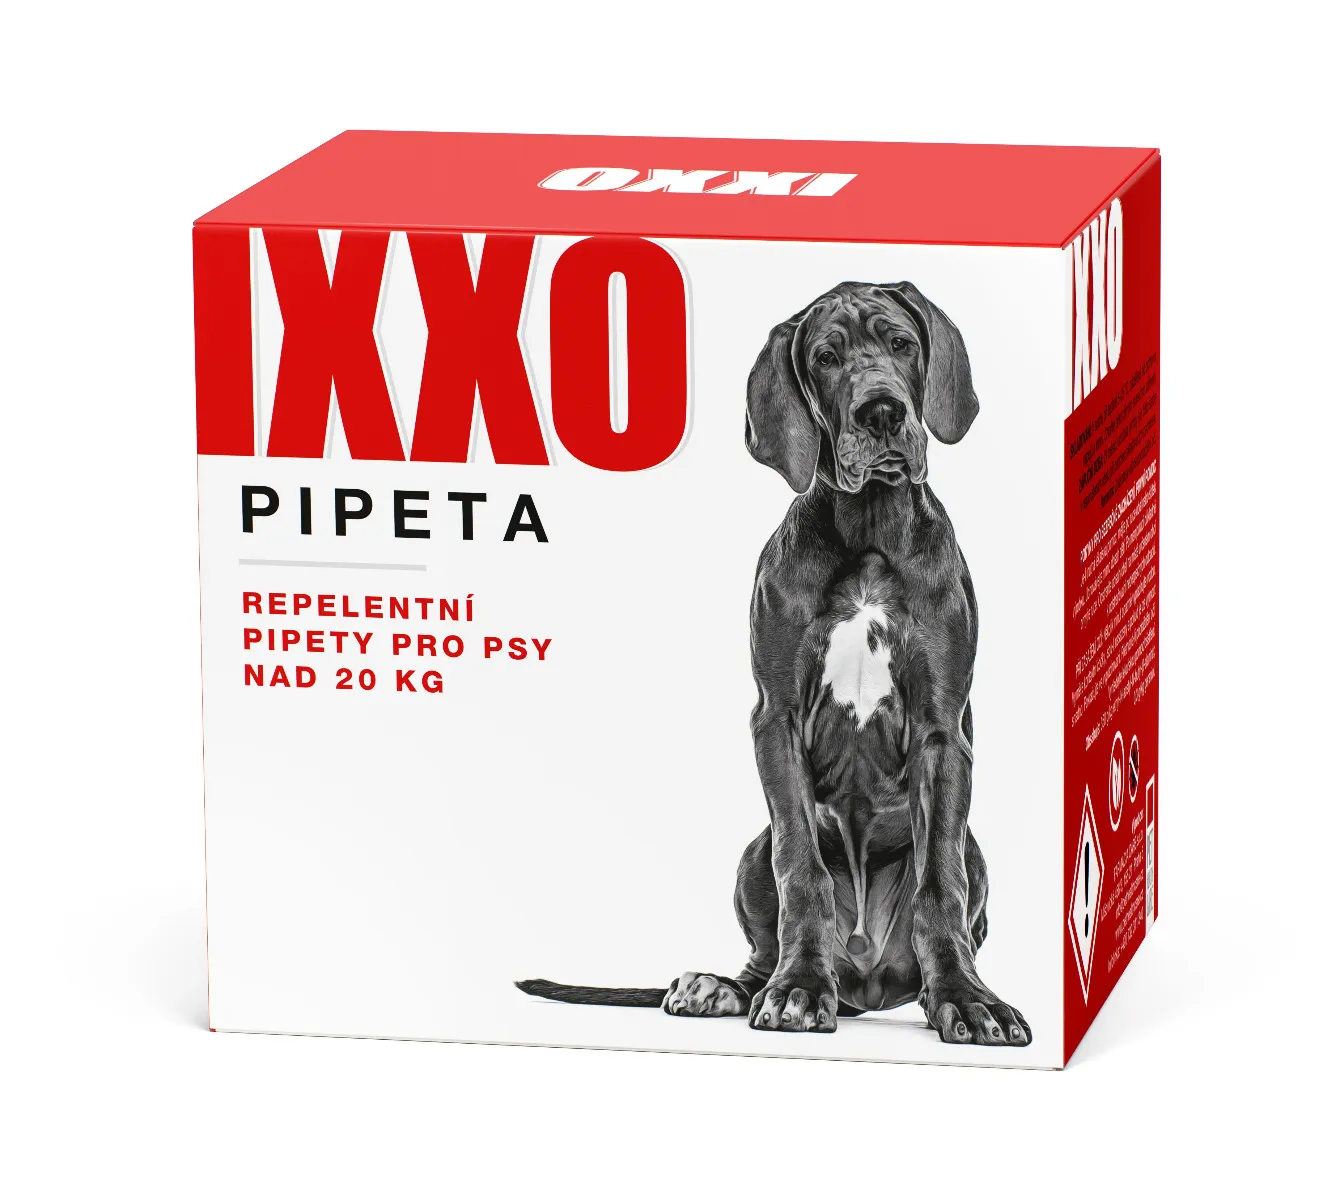 Pet health care IXXO Pipeta pro psy nad 20 kg